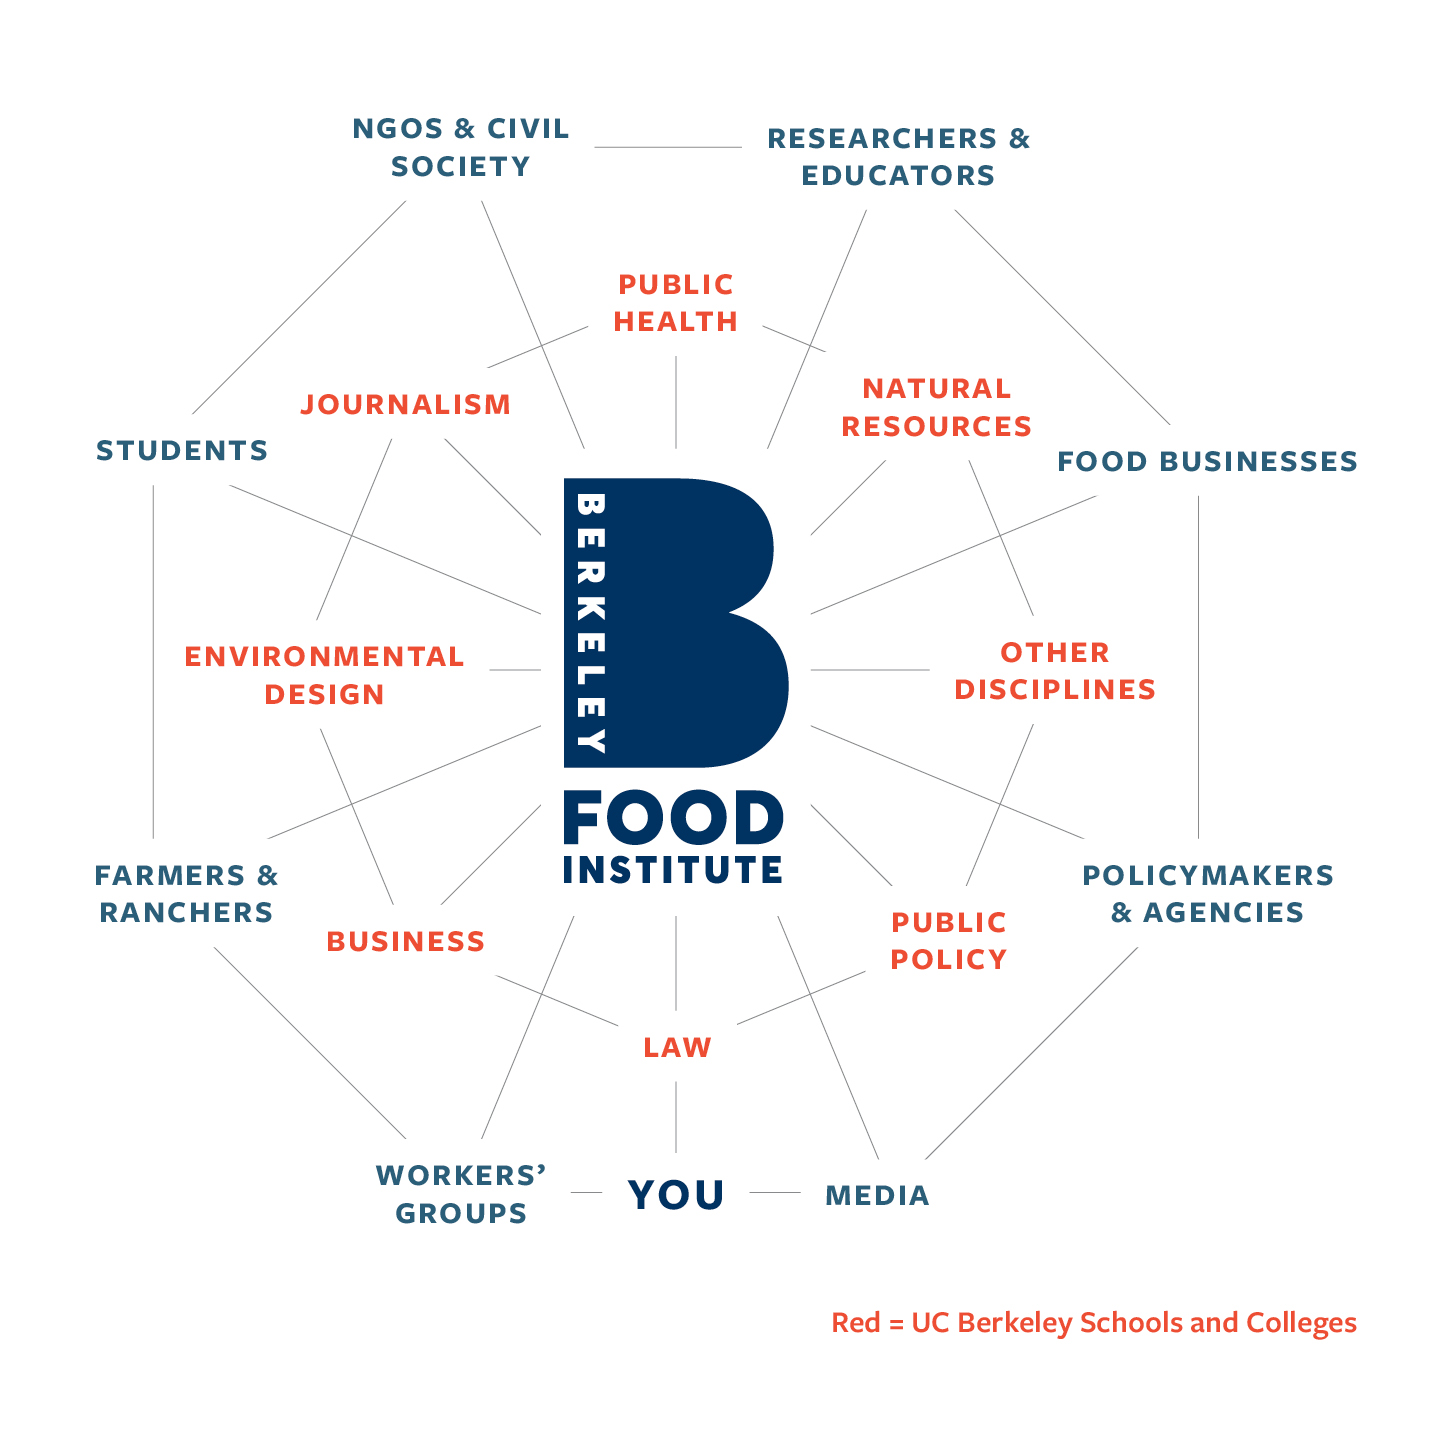 BFI's partner schools and disciplines